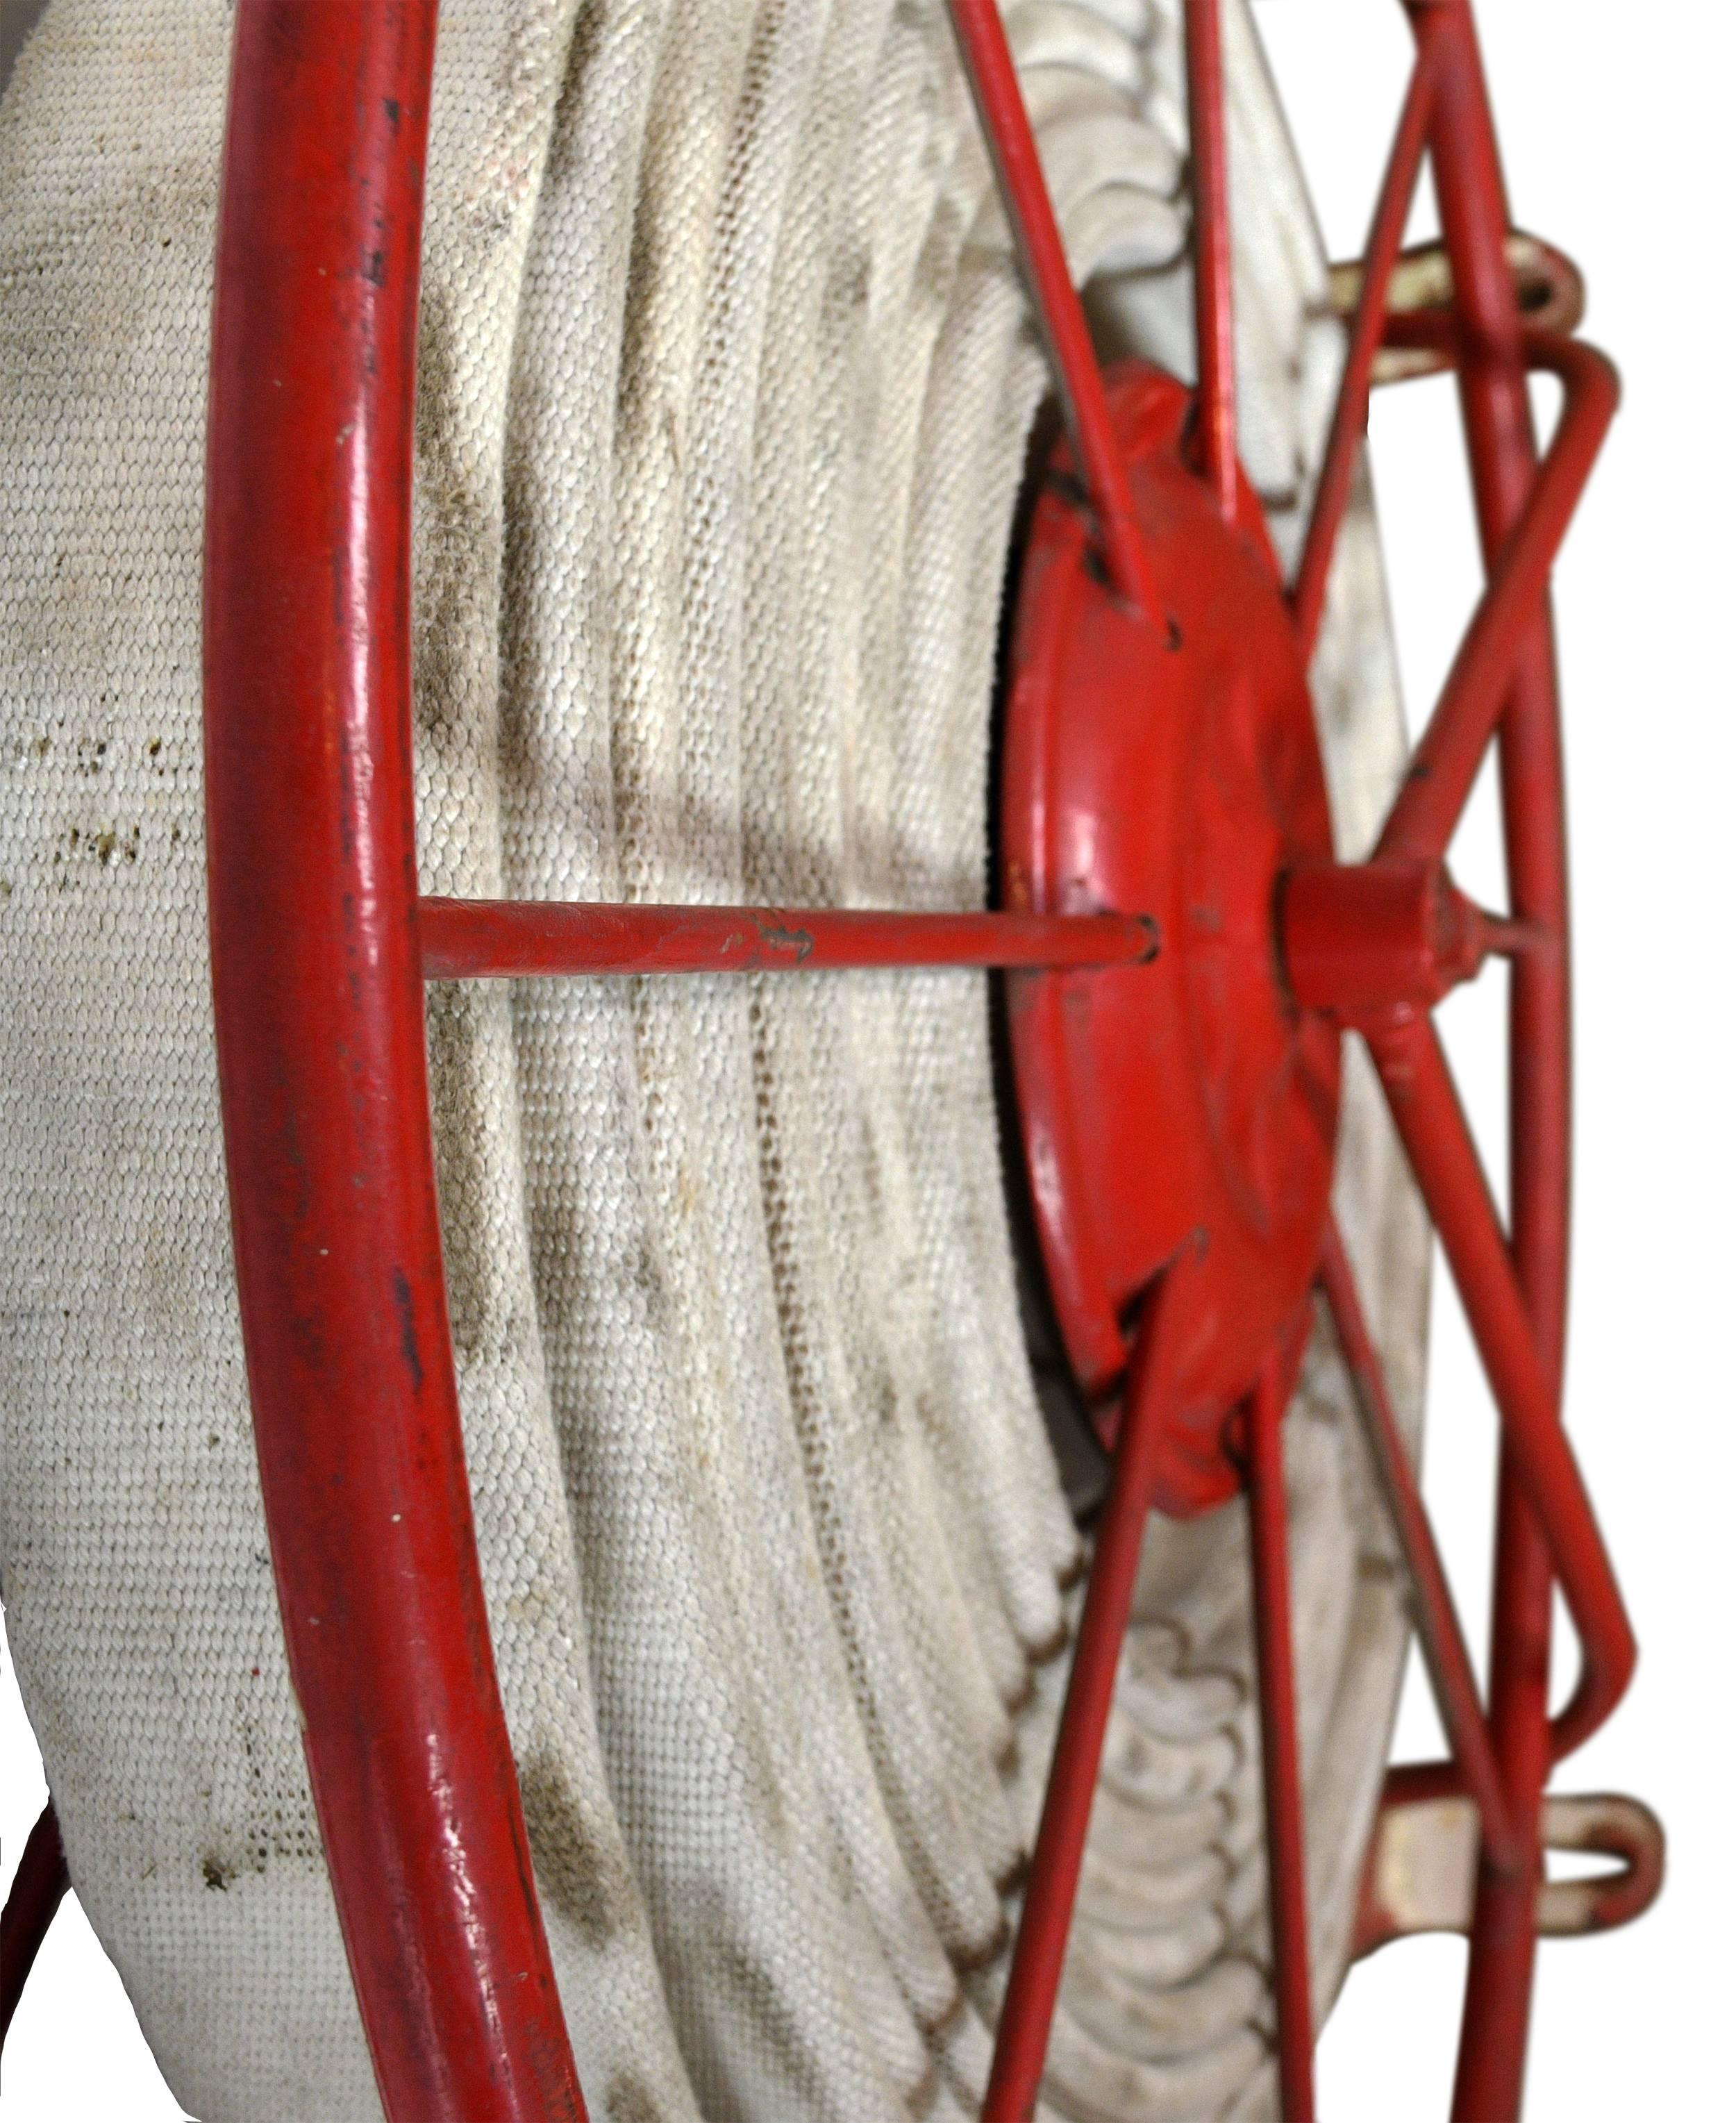 fire hose wheel